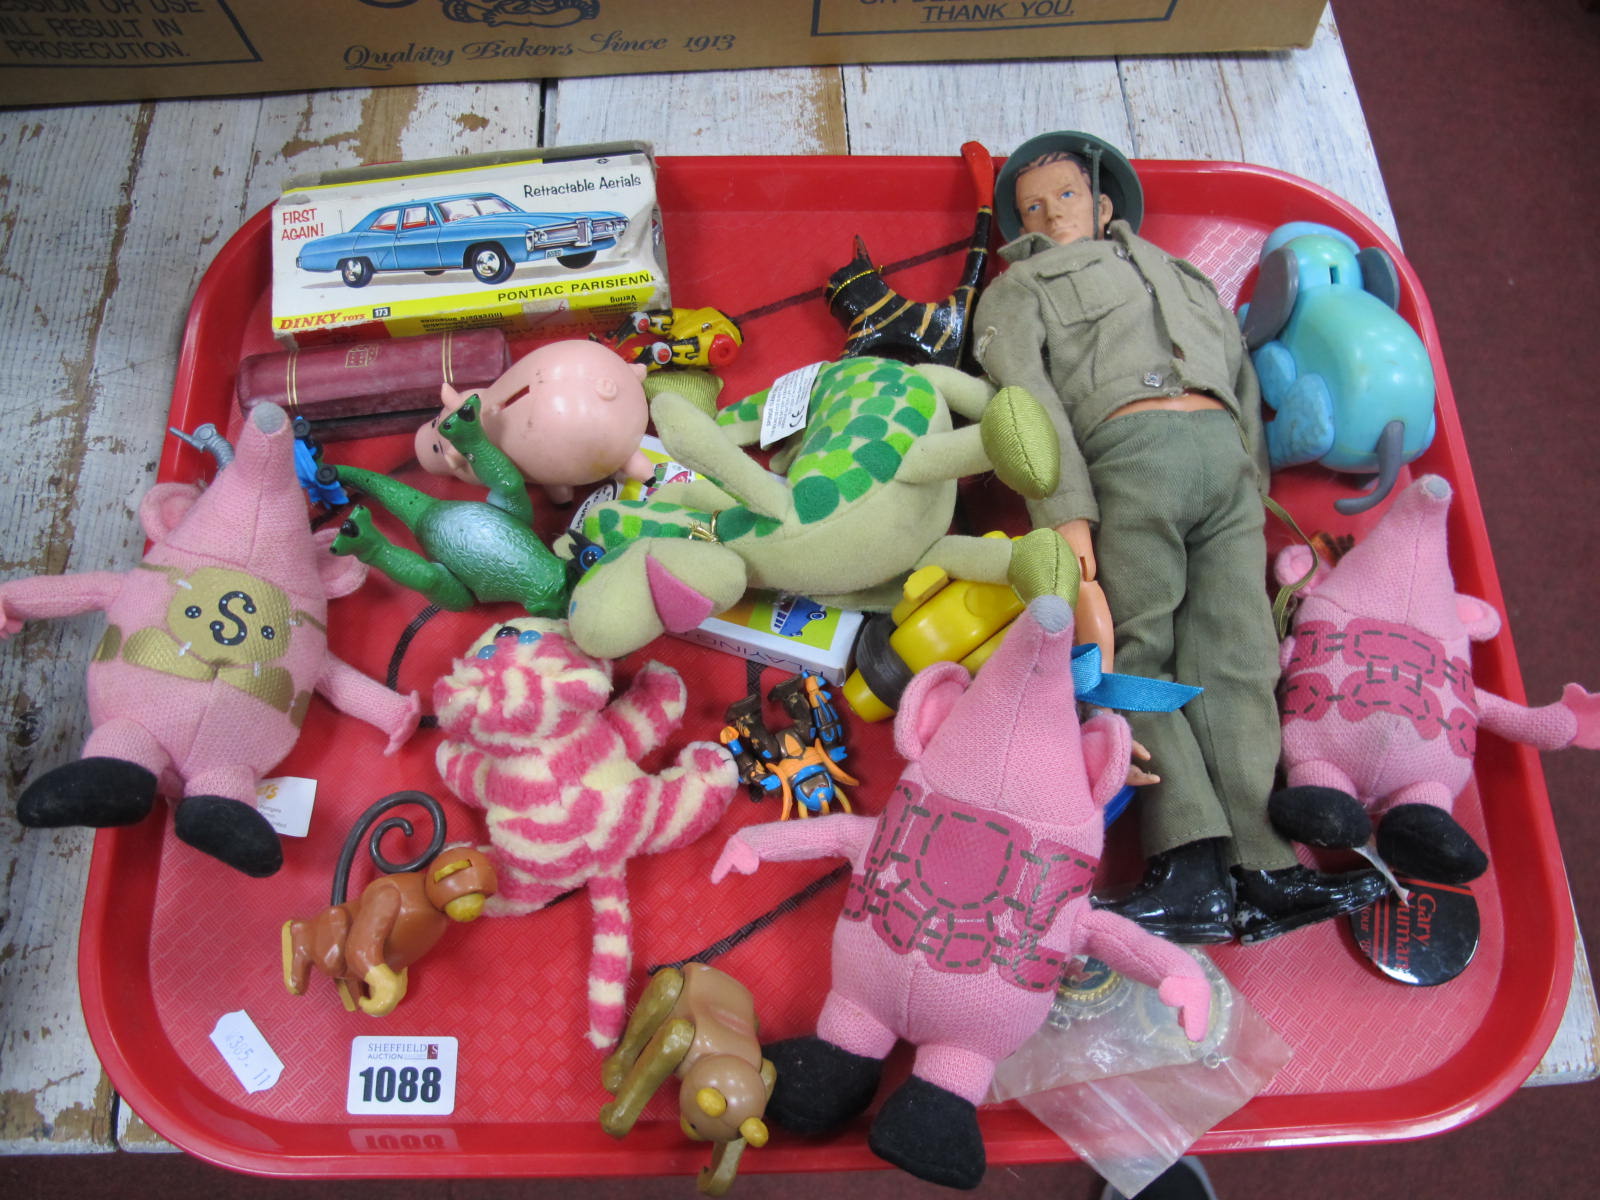 Dinky Pontiac Parisienne 173 (Red), in damaged box, soft toys, dice, Gary Numan badge, etc:- One